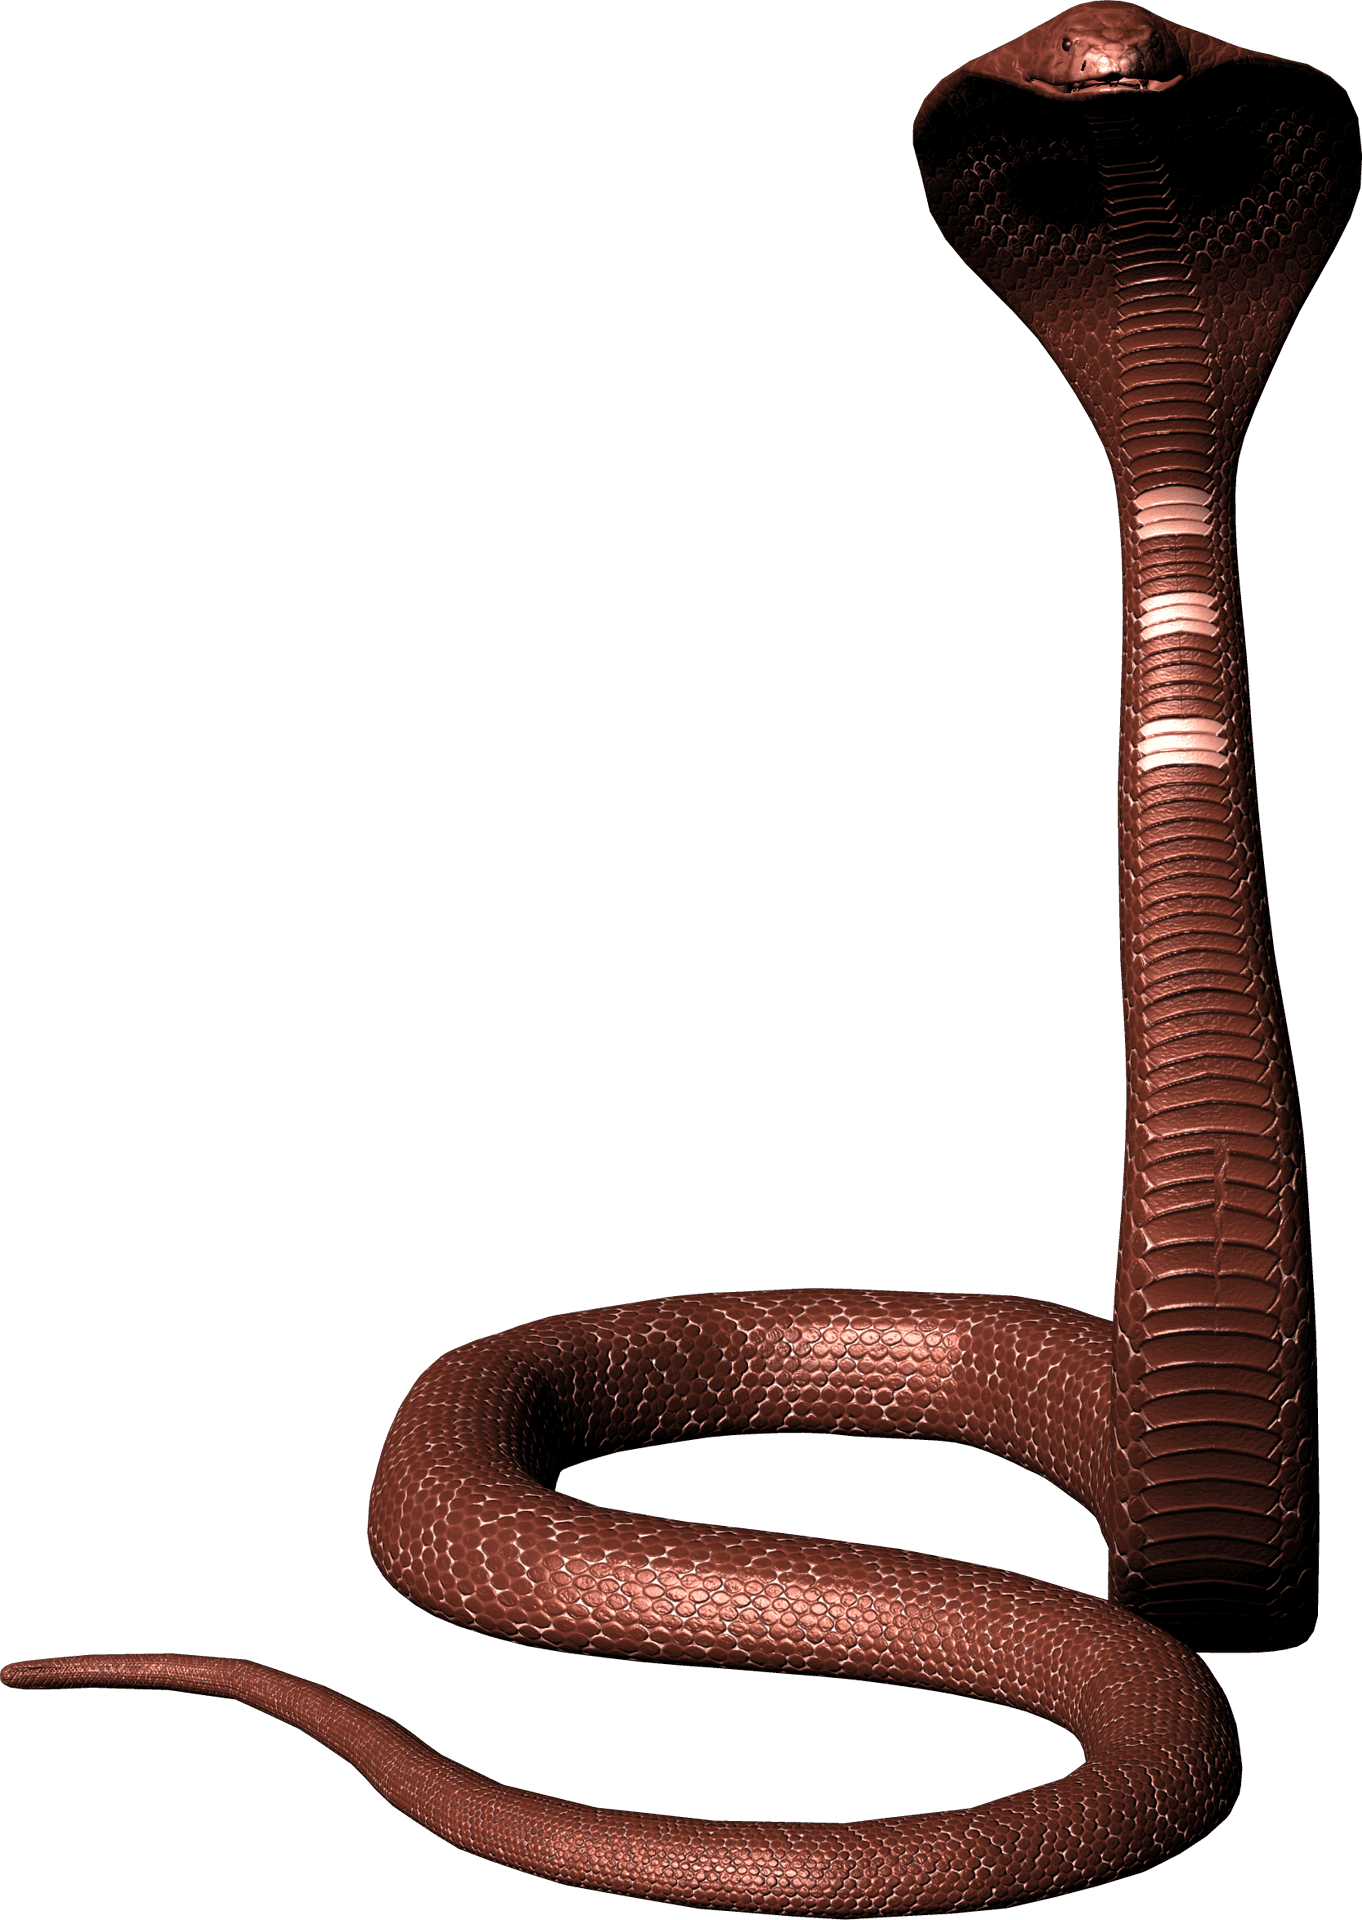 Cobra Snake Raised Hood PNG